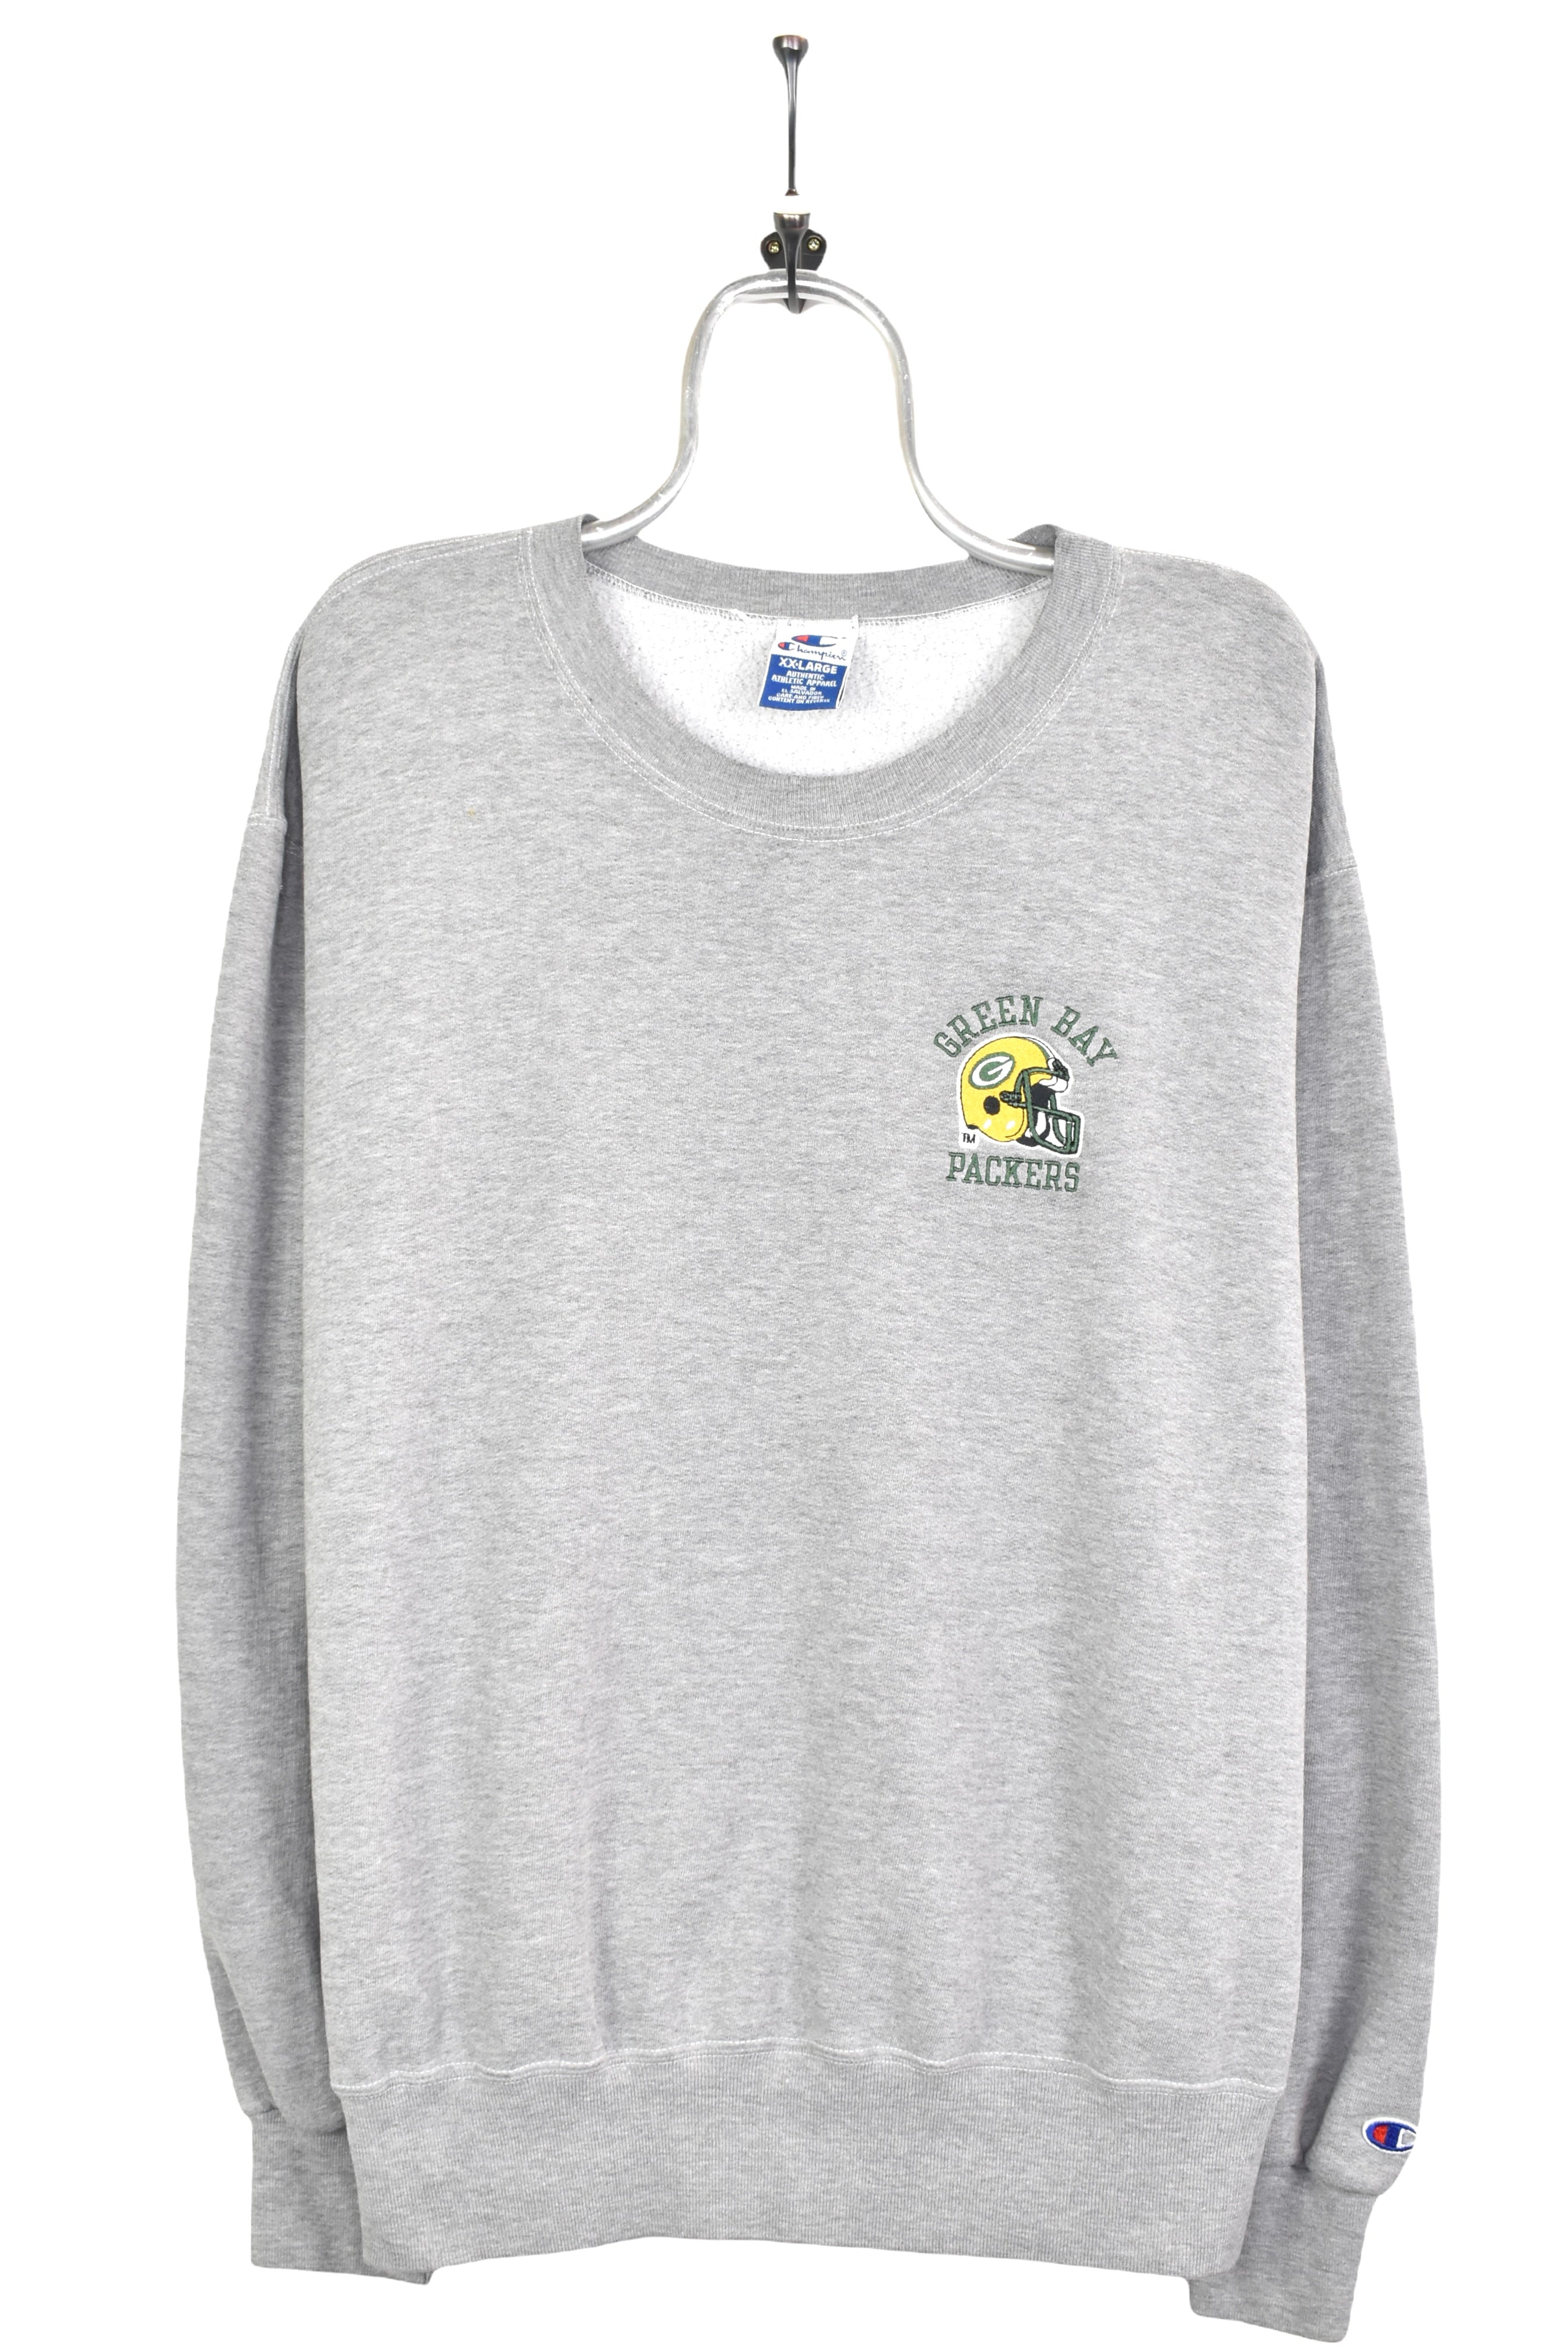 Vintage Green Bay Packers sweatshirt, NFL embroidered crewneck - XL, grey PRO SPORT